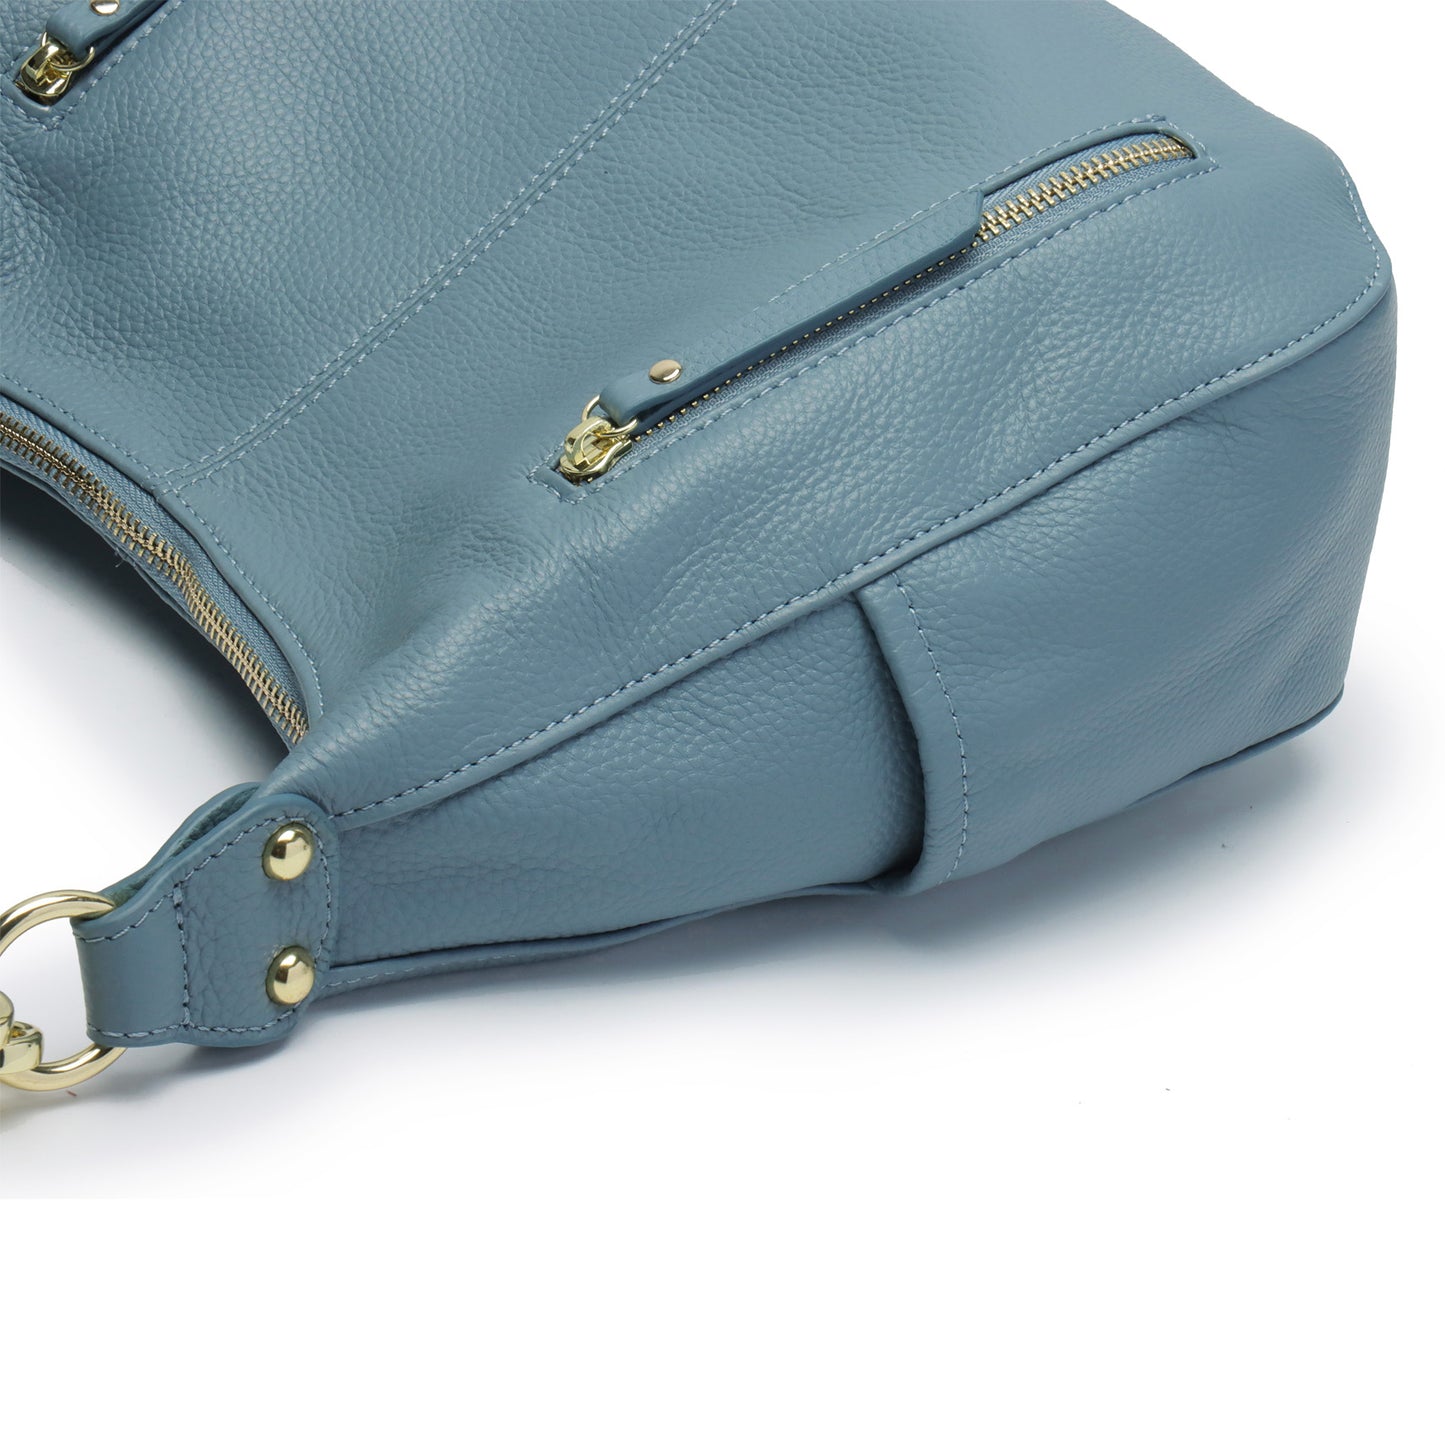 Women's genuine cowhide leather handbag Bora V3 design